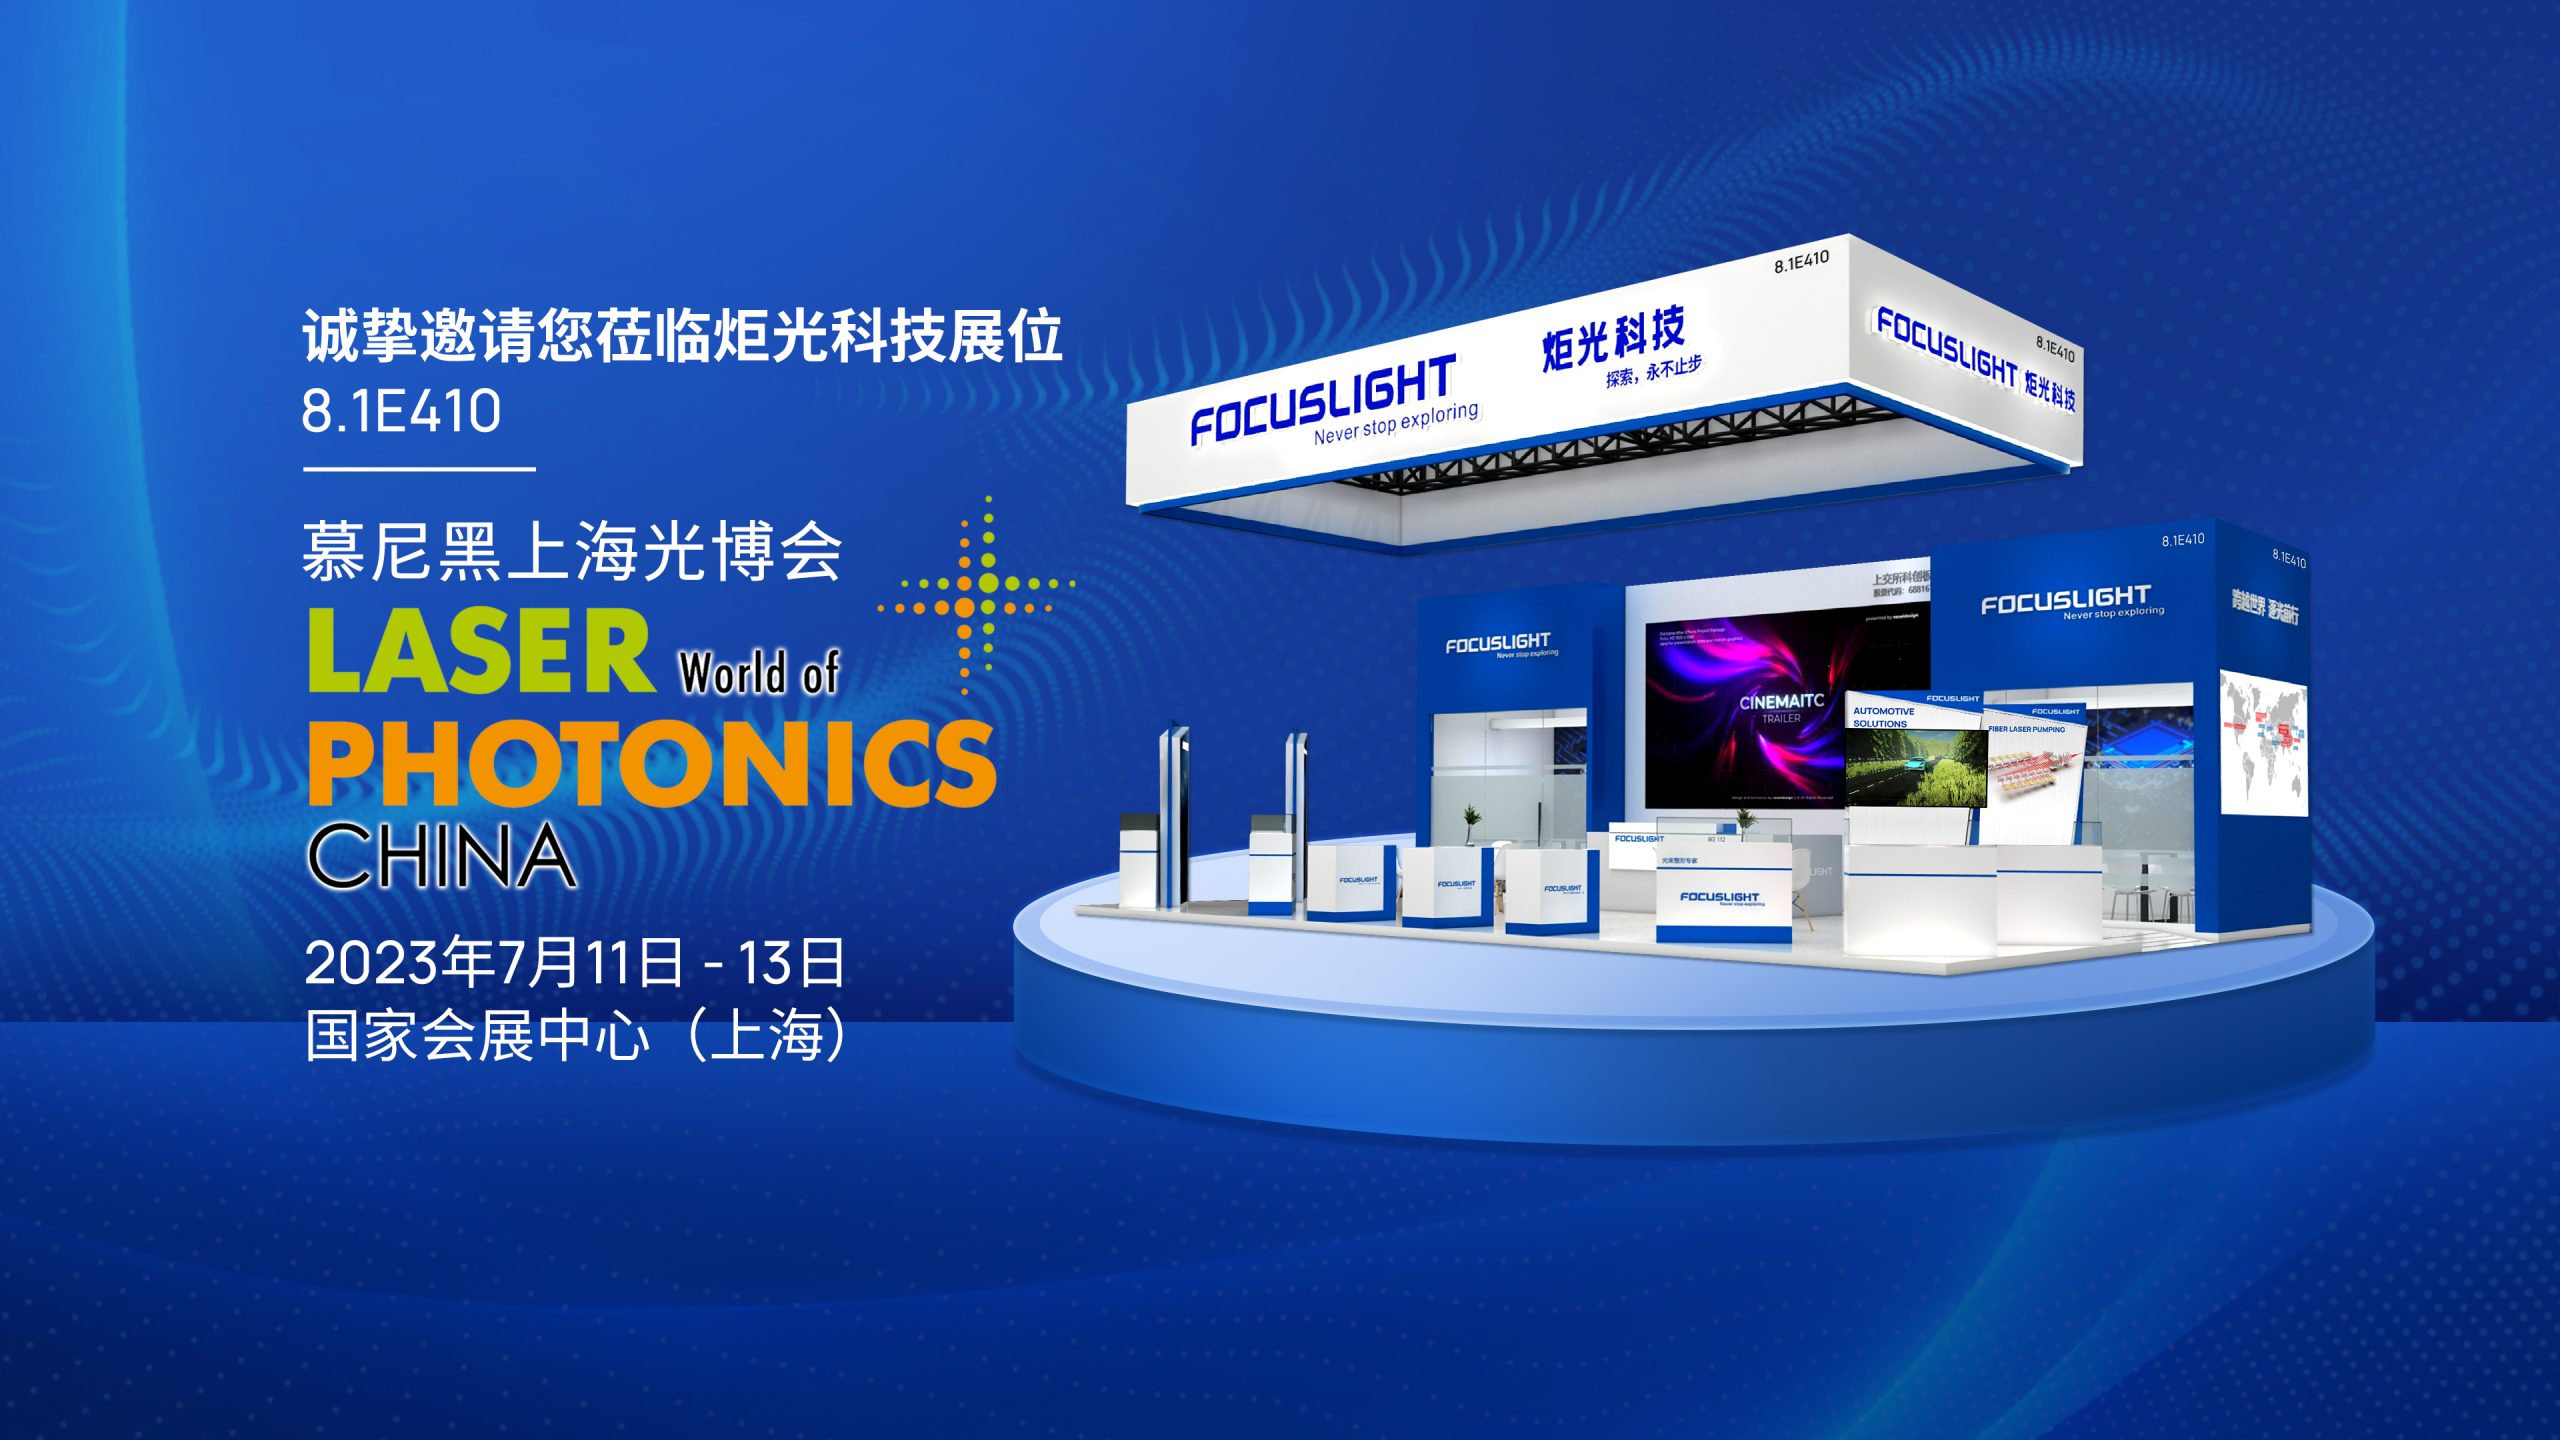 Focuslight Technologies Will Exhibit at Laser World of Photonics China 2023 